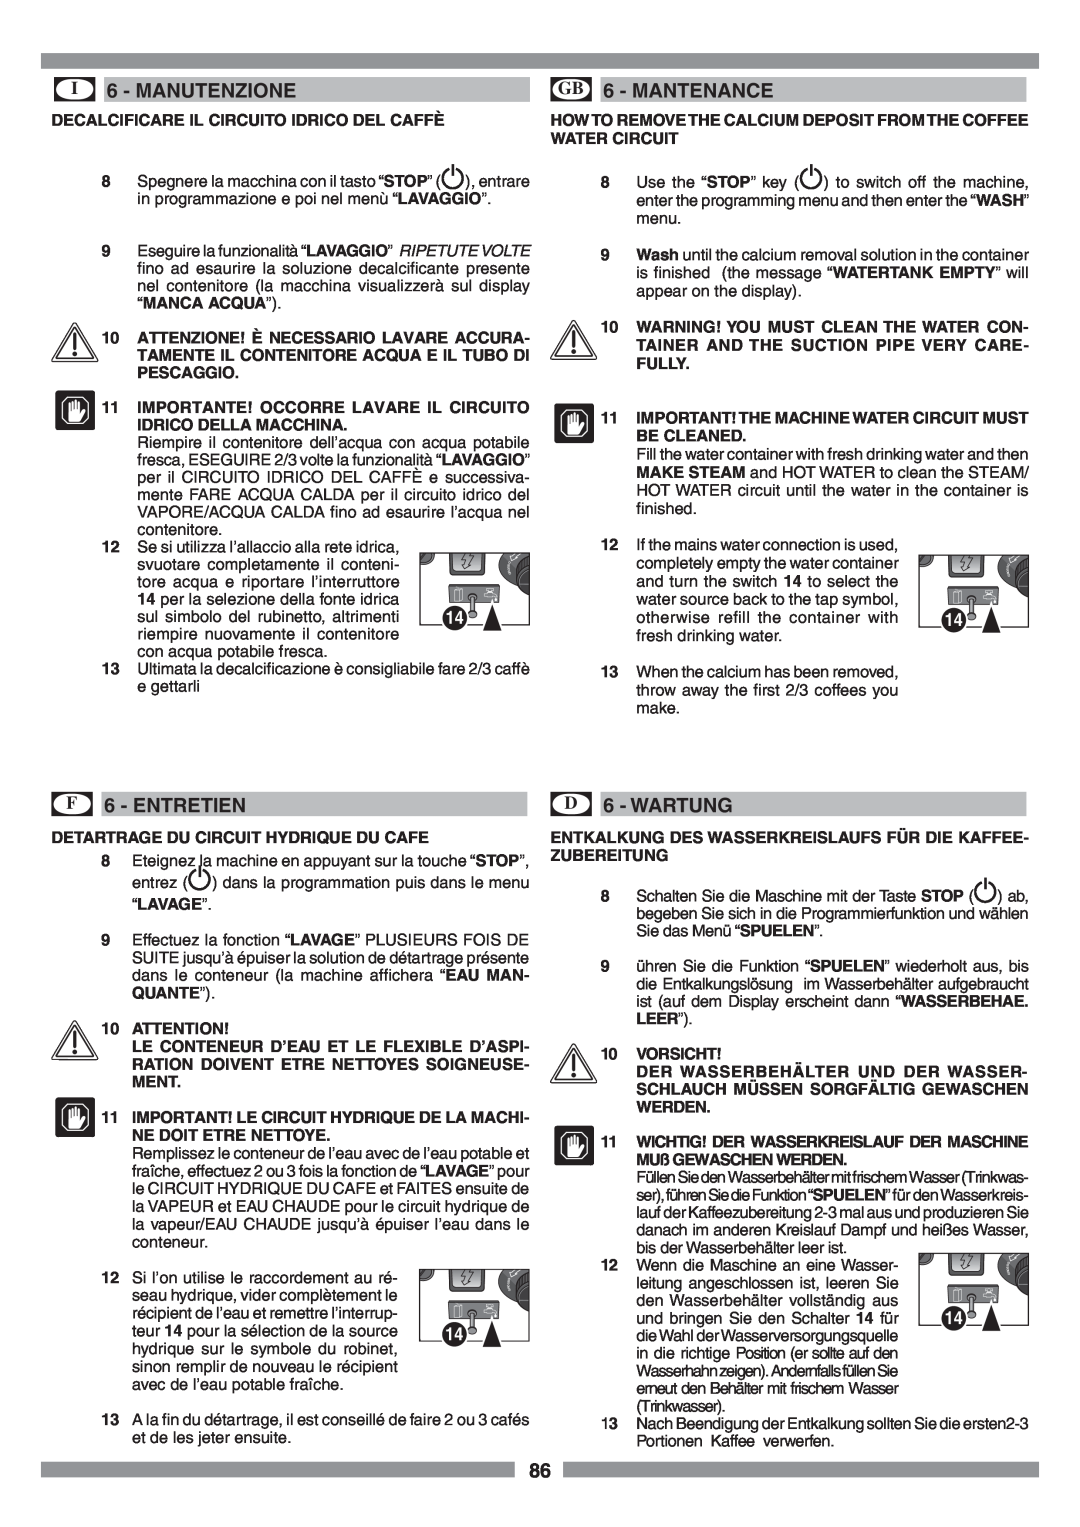 Smeg SCM1 manual I 6 - MANUTENZIONE, GB 6 - MANTENANCE, F 6 - ENTRETIEN, D 6 - WARTUNG 